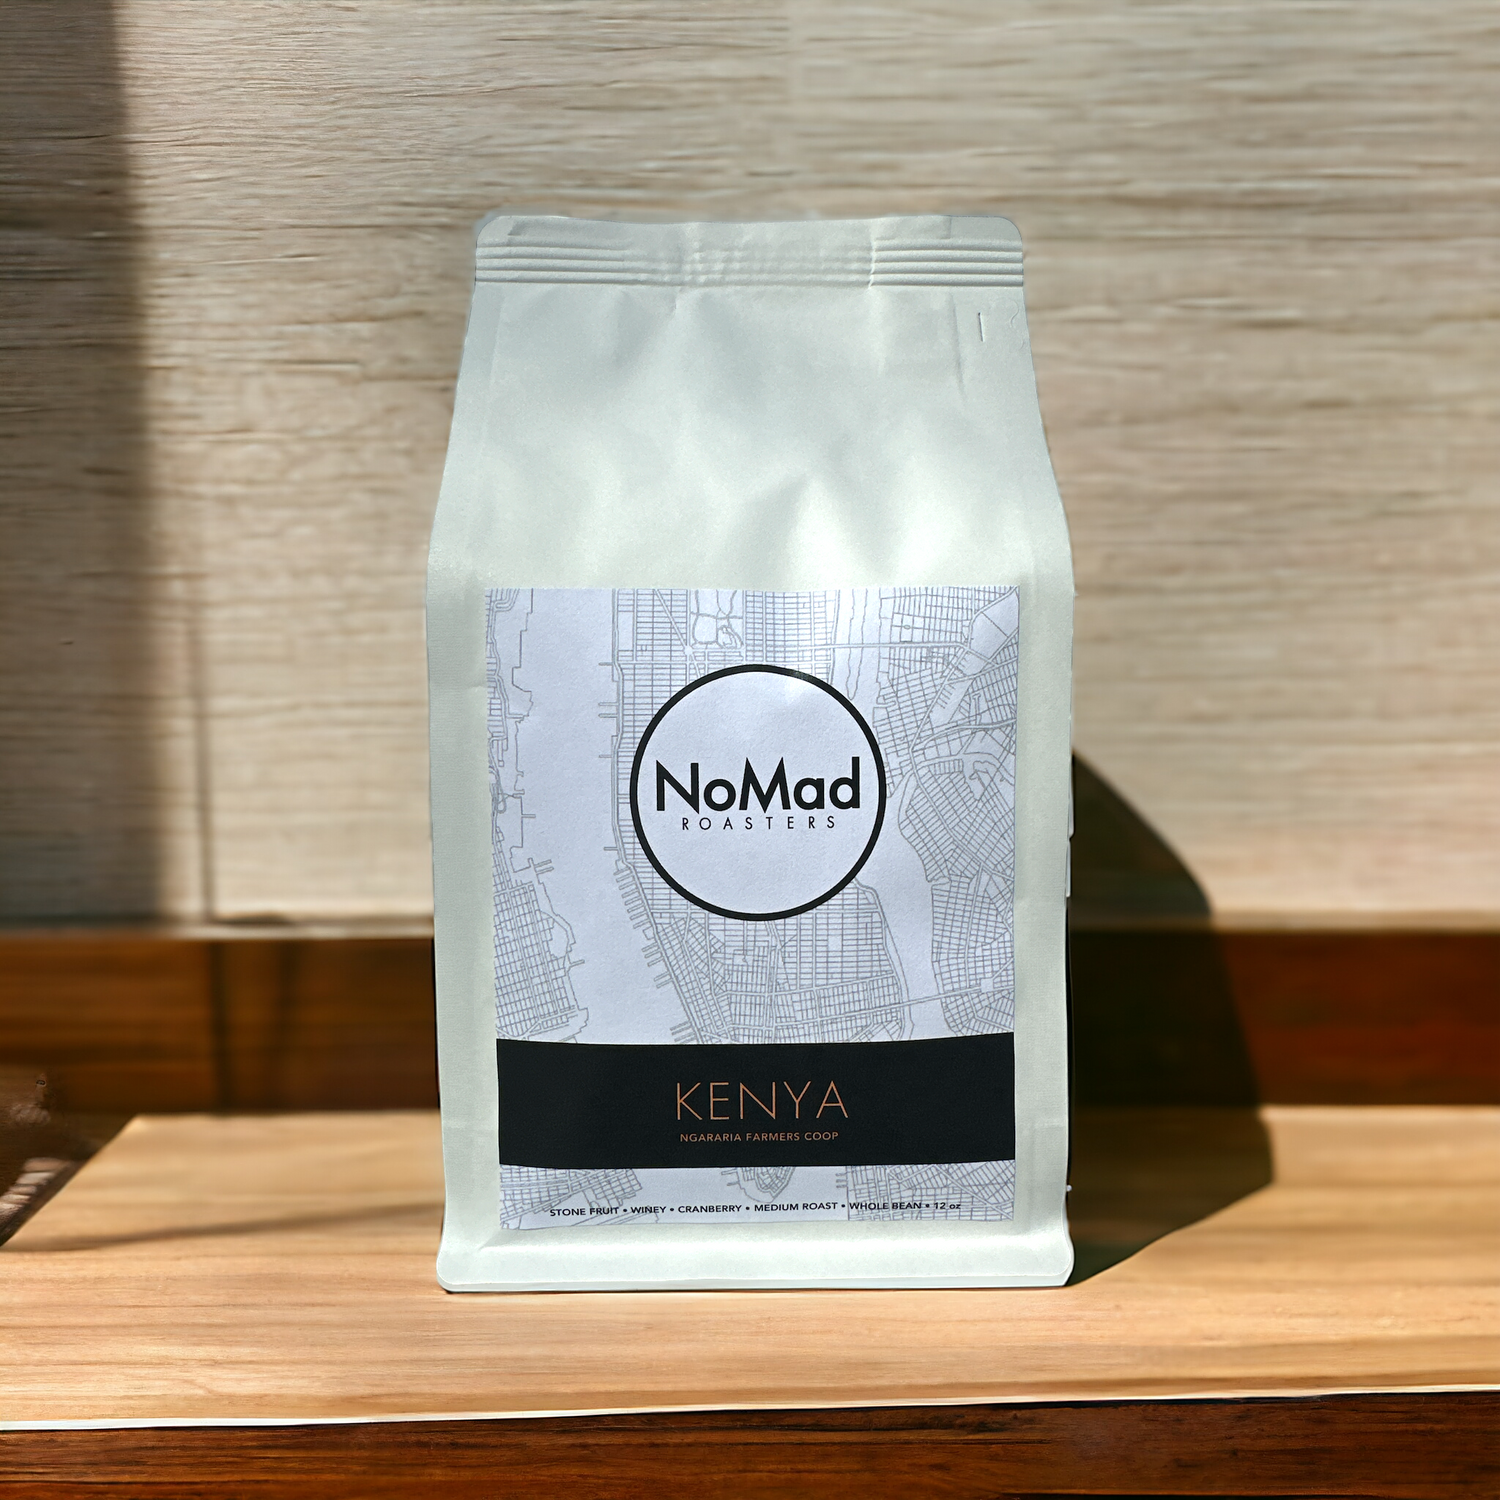 Nomad's Kenya coffee from Ngararia Farmers Coop. Medium roast.